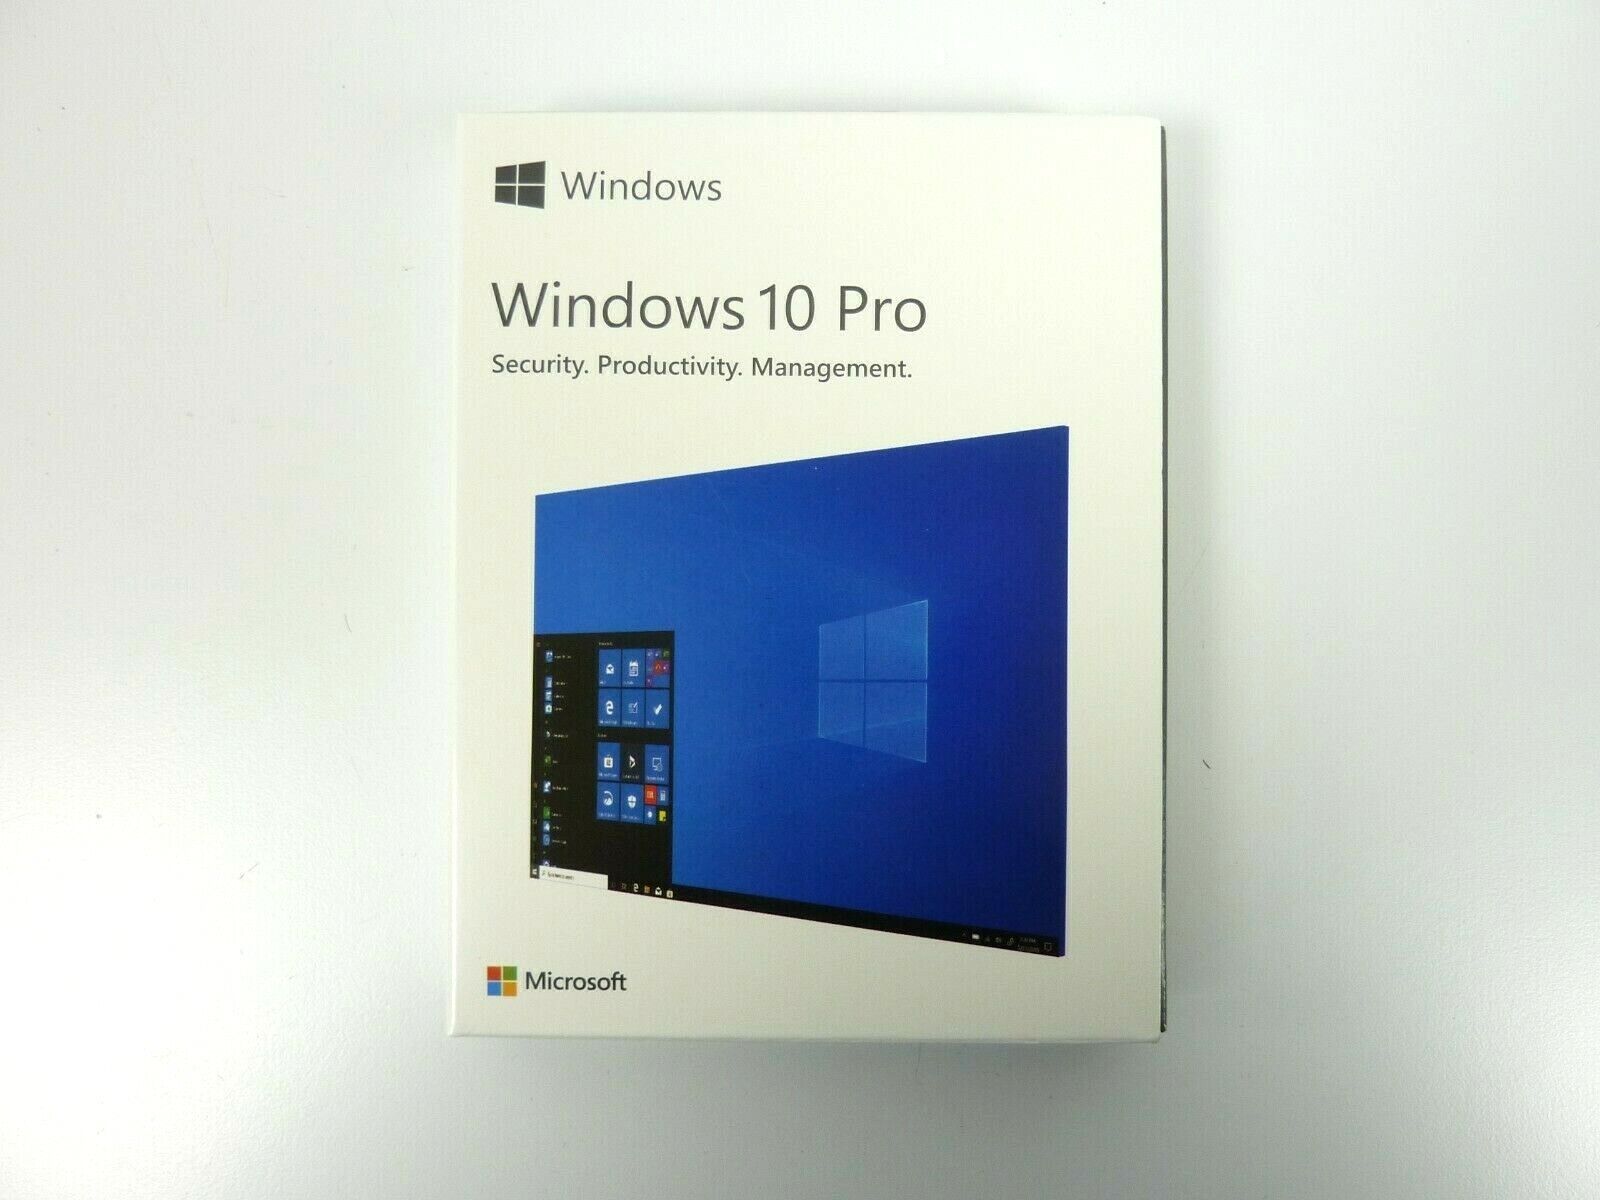 Microsoft Windows 10 Pro Professional 32/64bit USB Kit Package Sealed Retail box